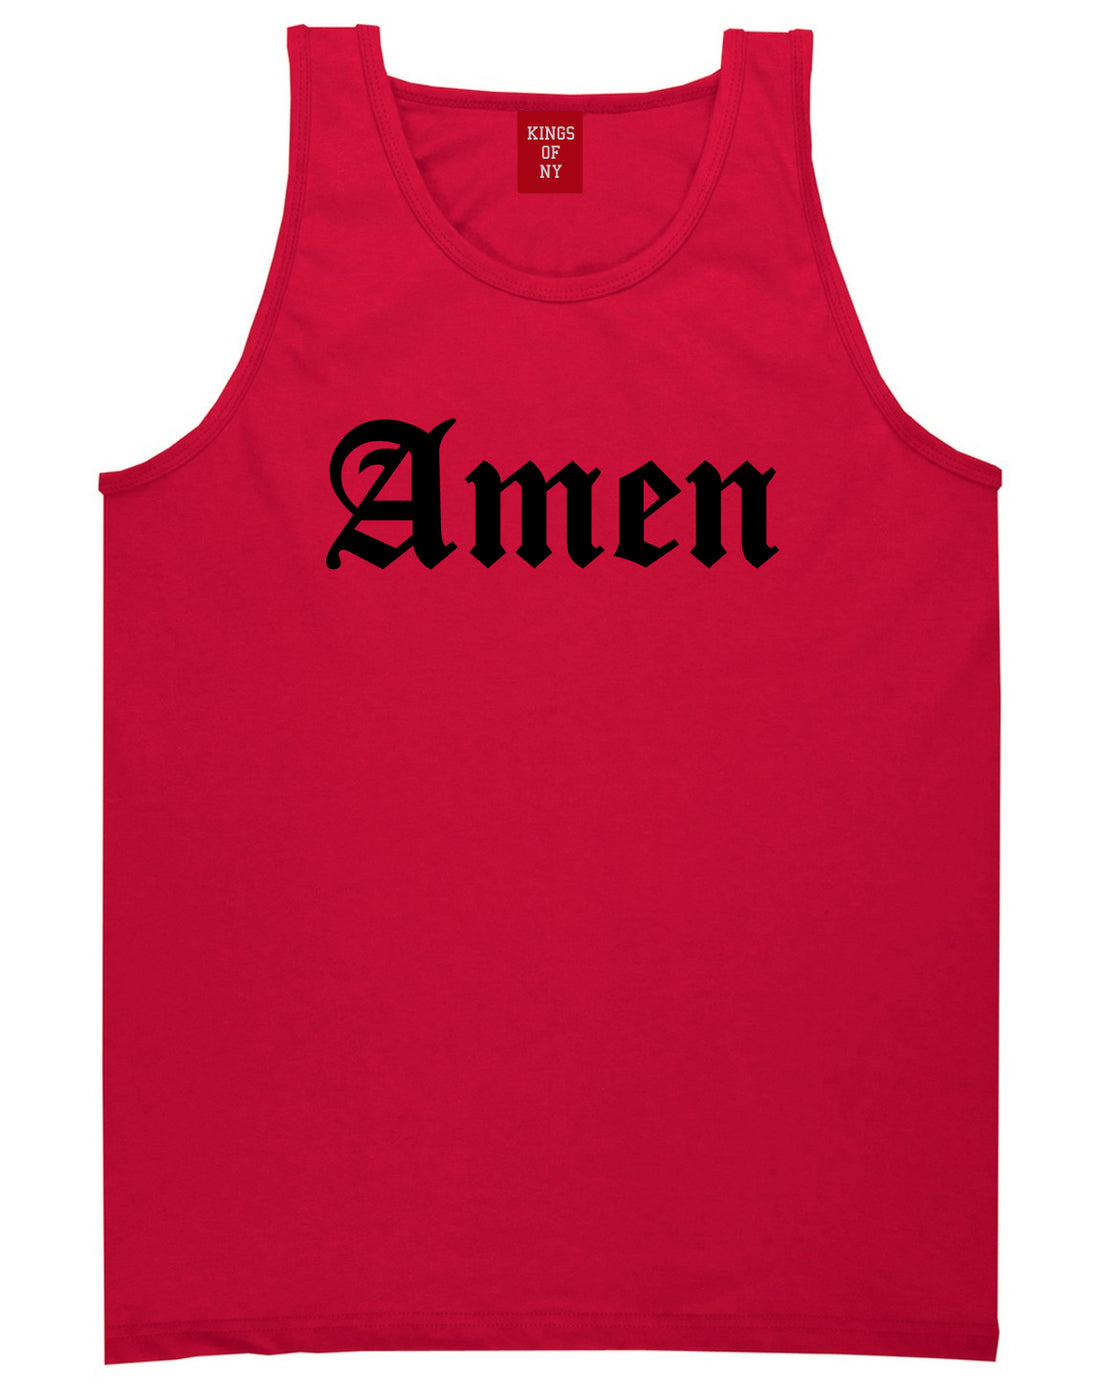 Amen Old English Prayer Mens Tank Top T-Shirt Red